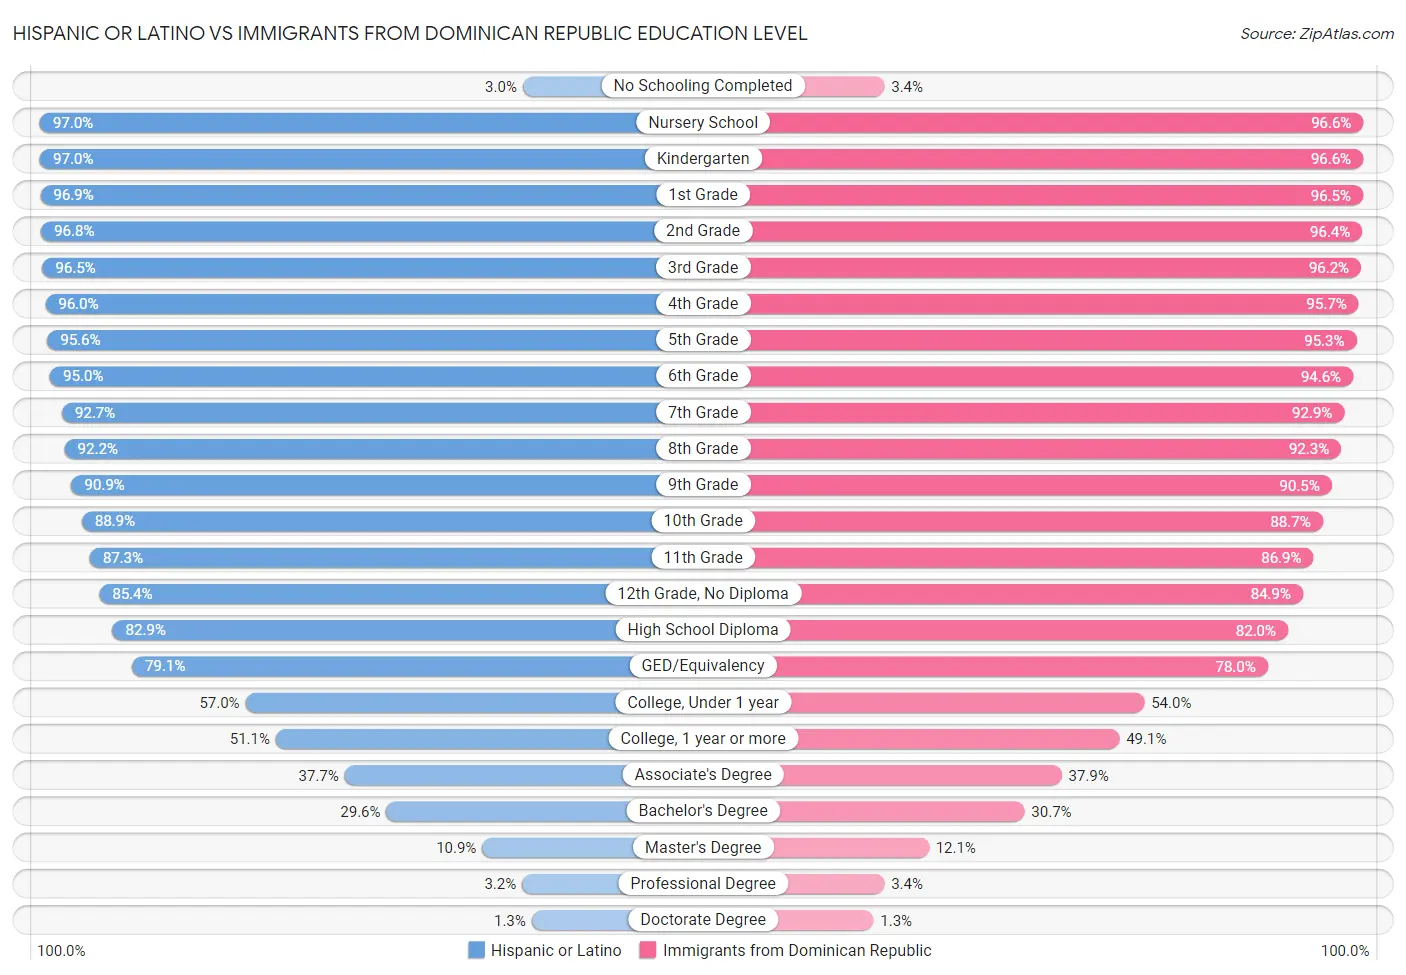 Hispanic or Latino vs Immigrants from Dominican Republic Education Level